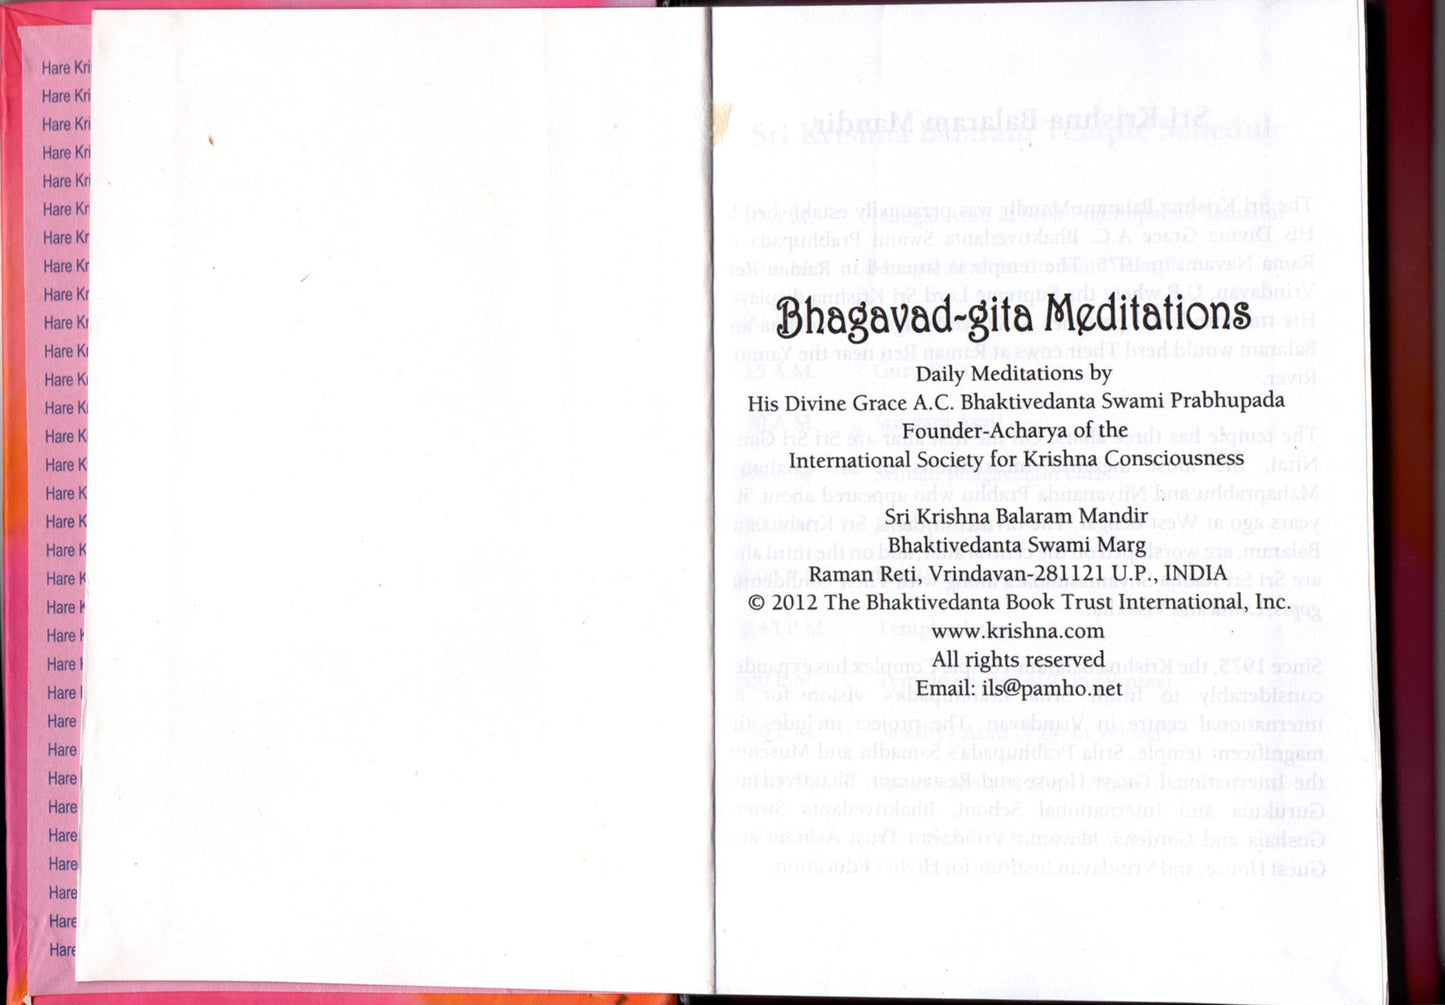 ISKCON Bhagavad-gita Meditations Diary 2022